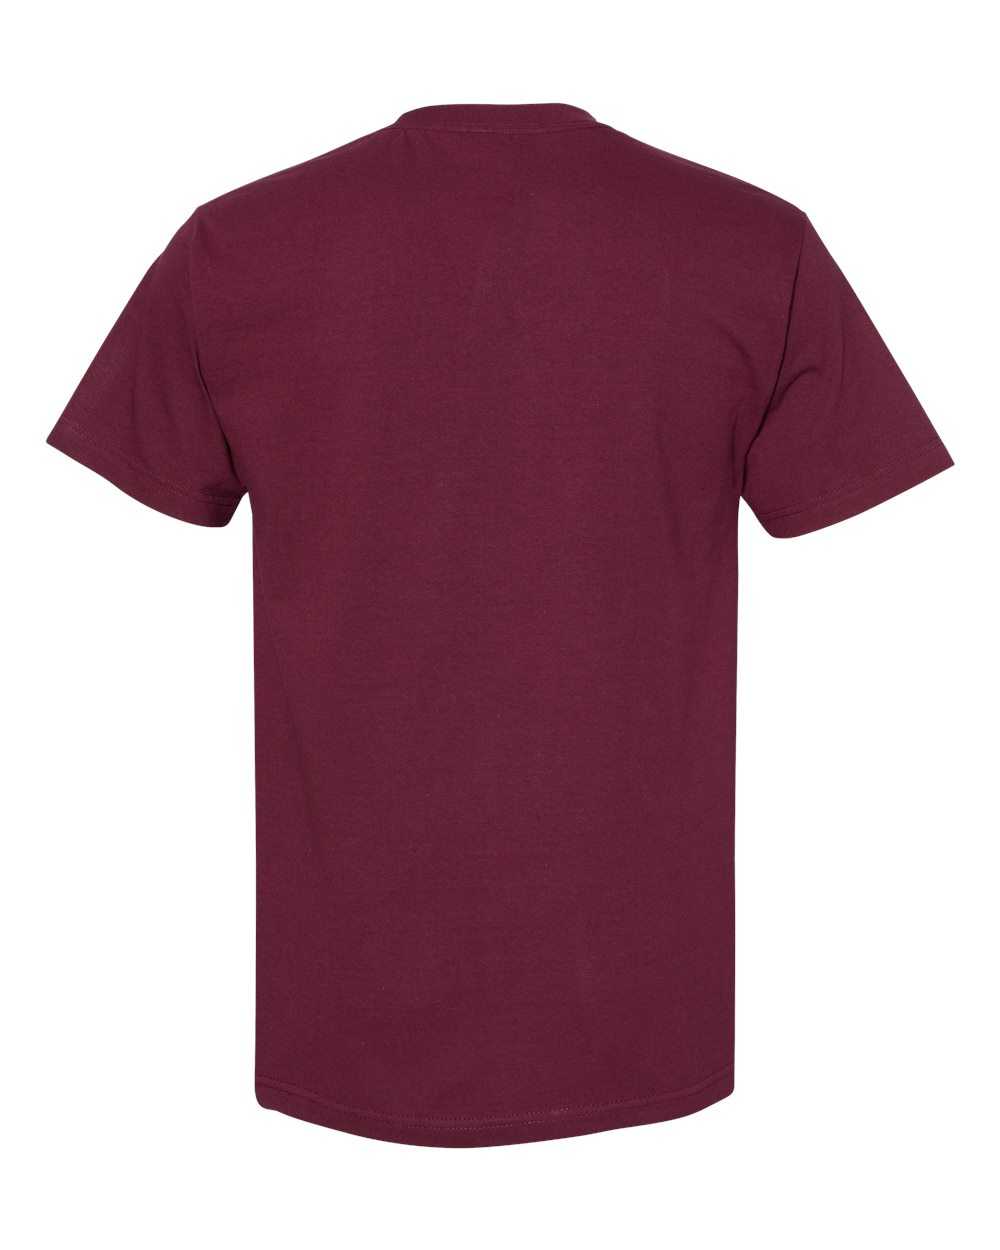 American Apparel 1301 Unisex Heavyweight Cotton T-Shirt - Burgundy - HIT a Double